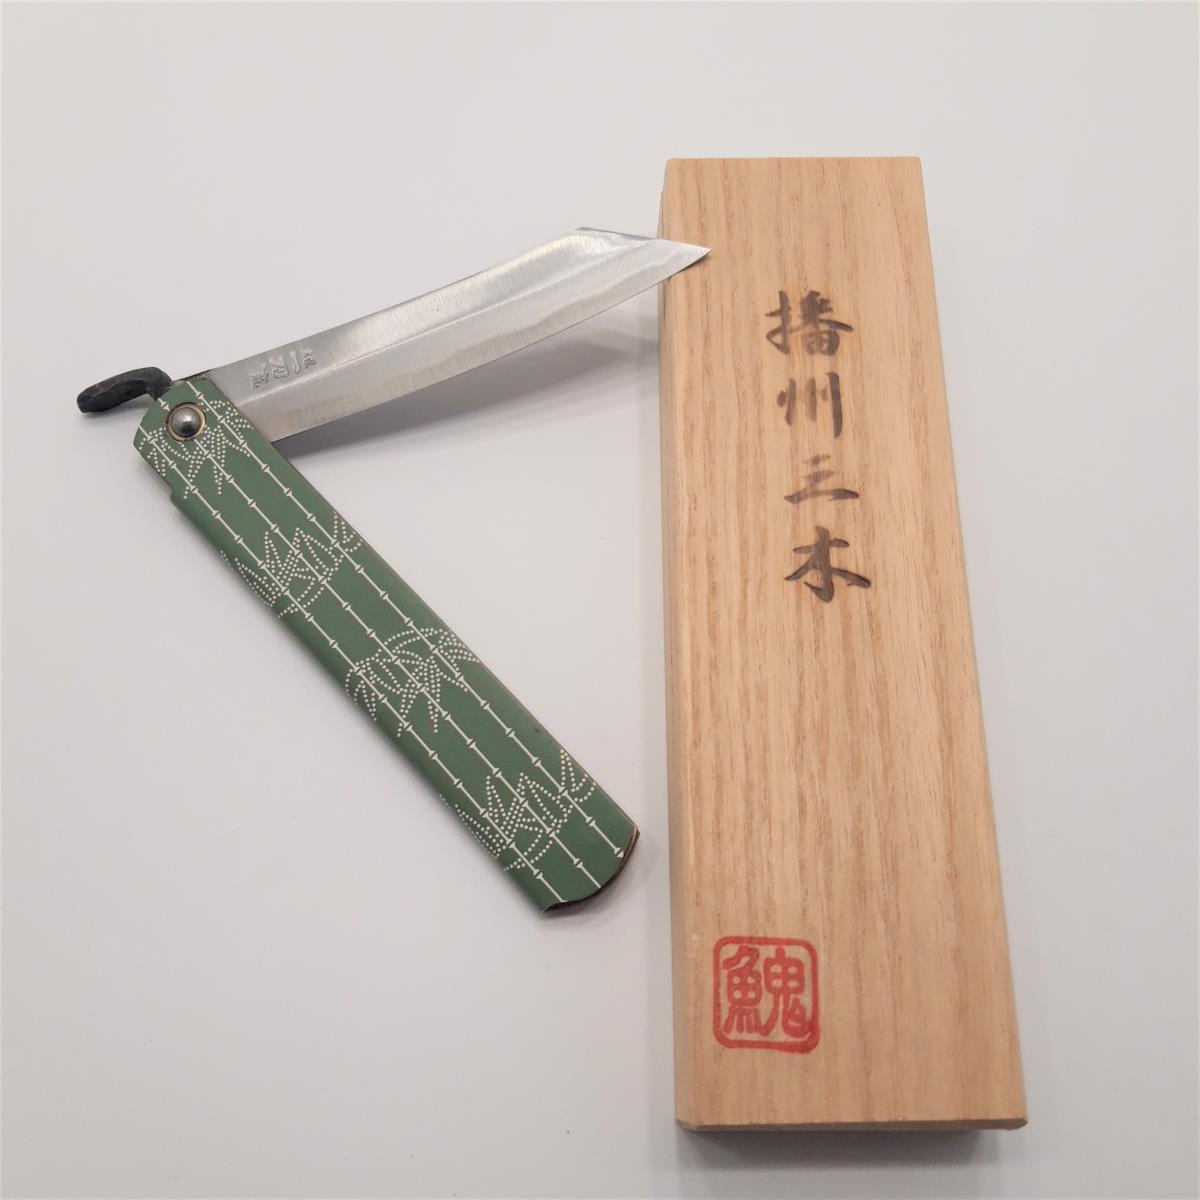 Higonokami "Take", motivo di canne di bambù